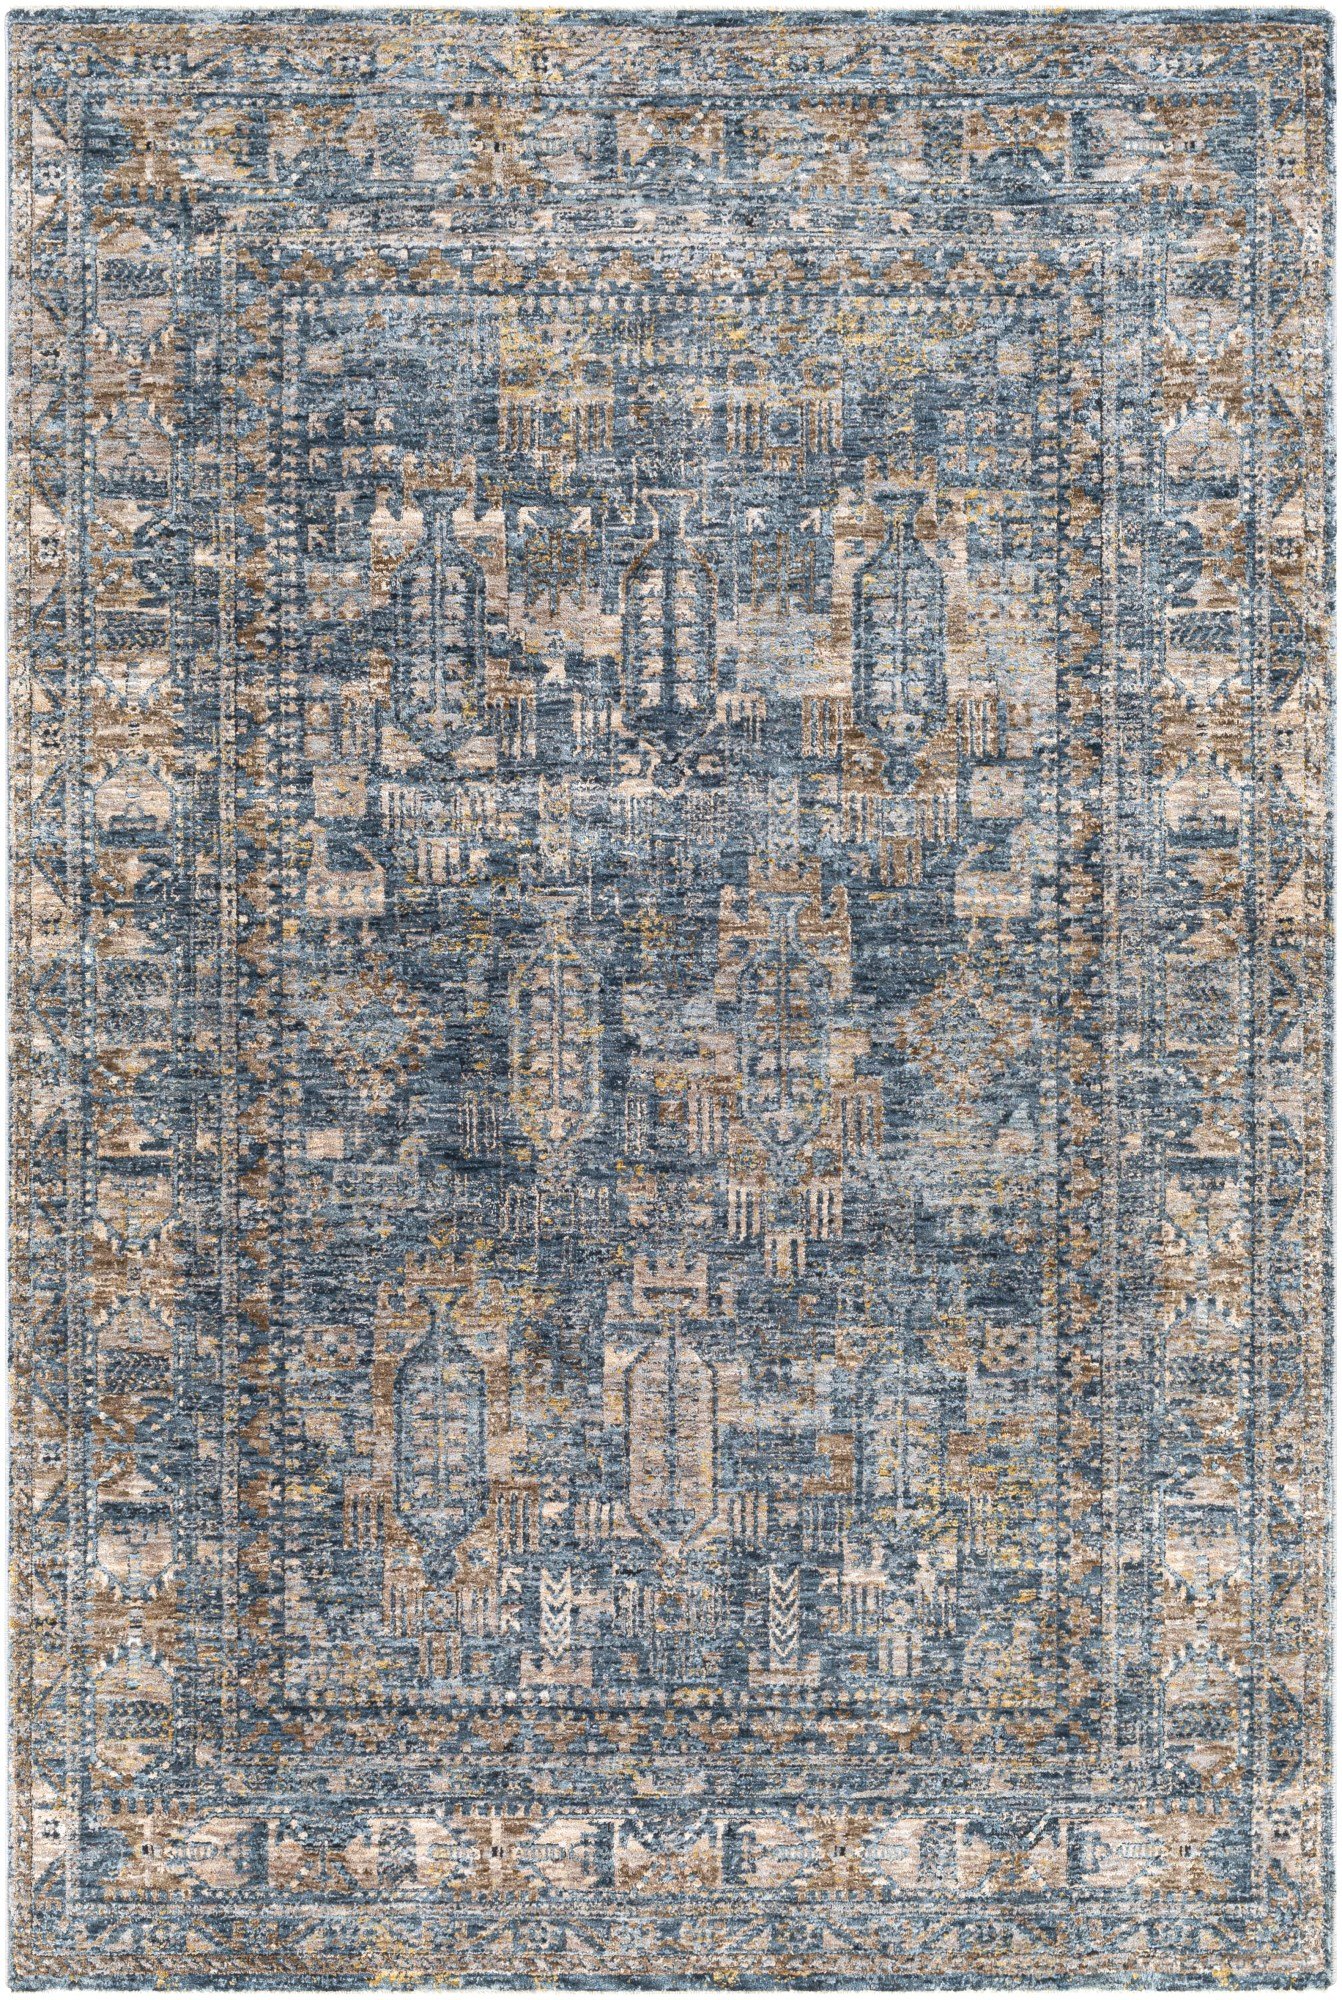 Blue Area Rugs 8x10 Carpets Direct, Light Blue Area Rug 8 215 10